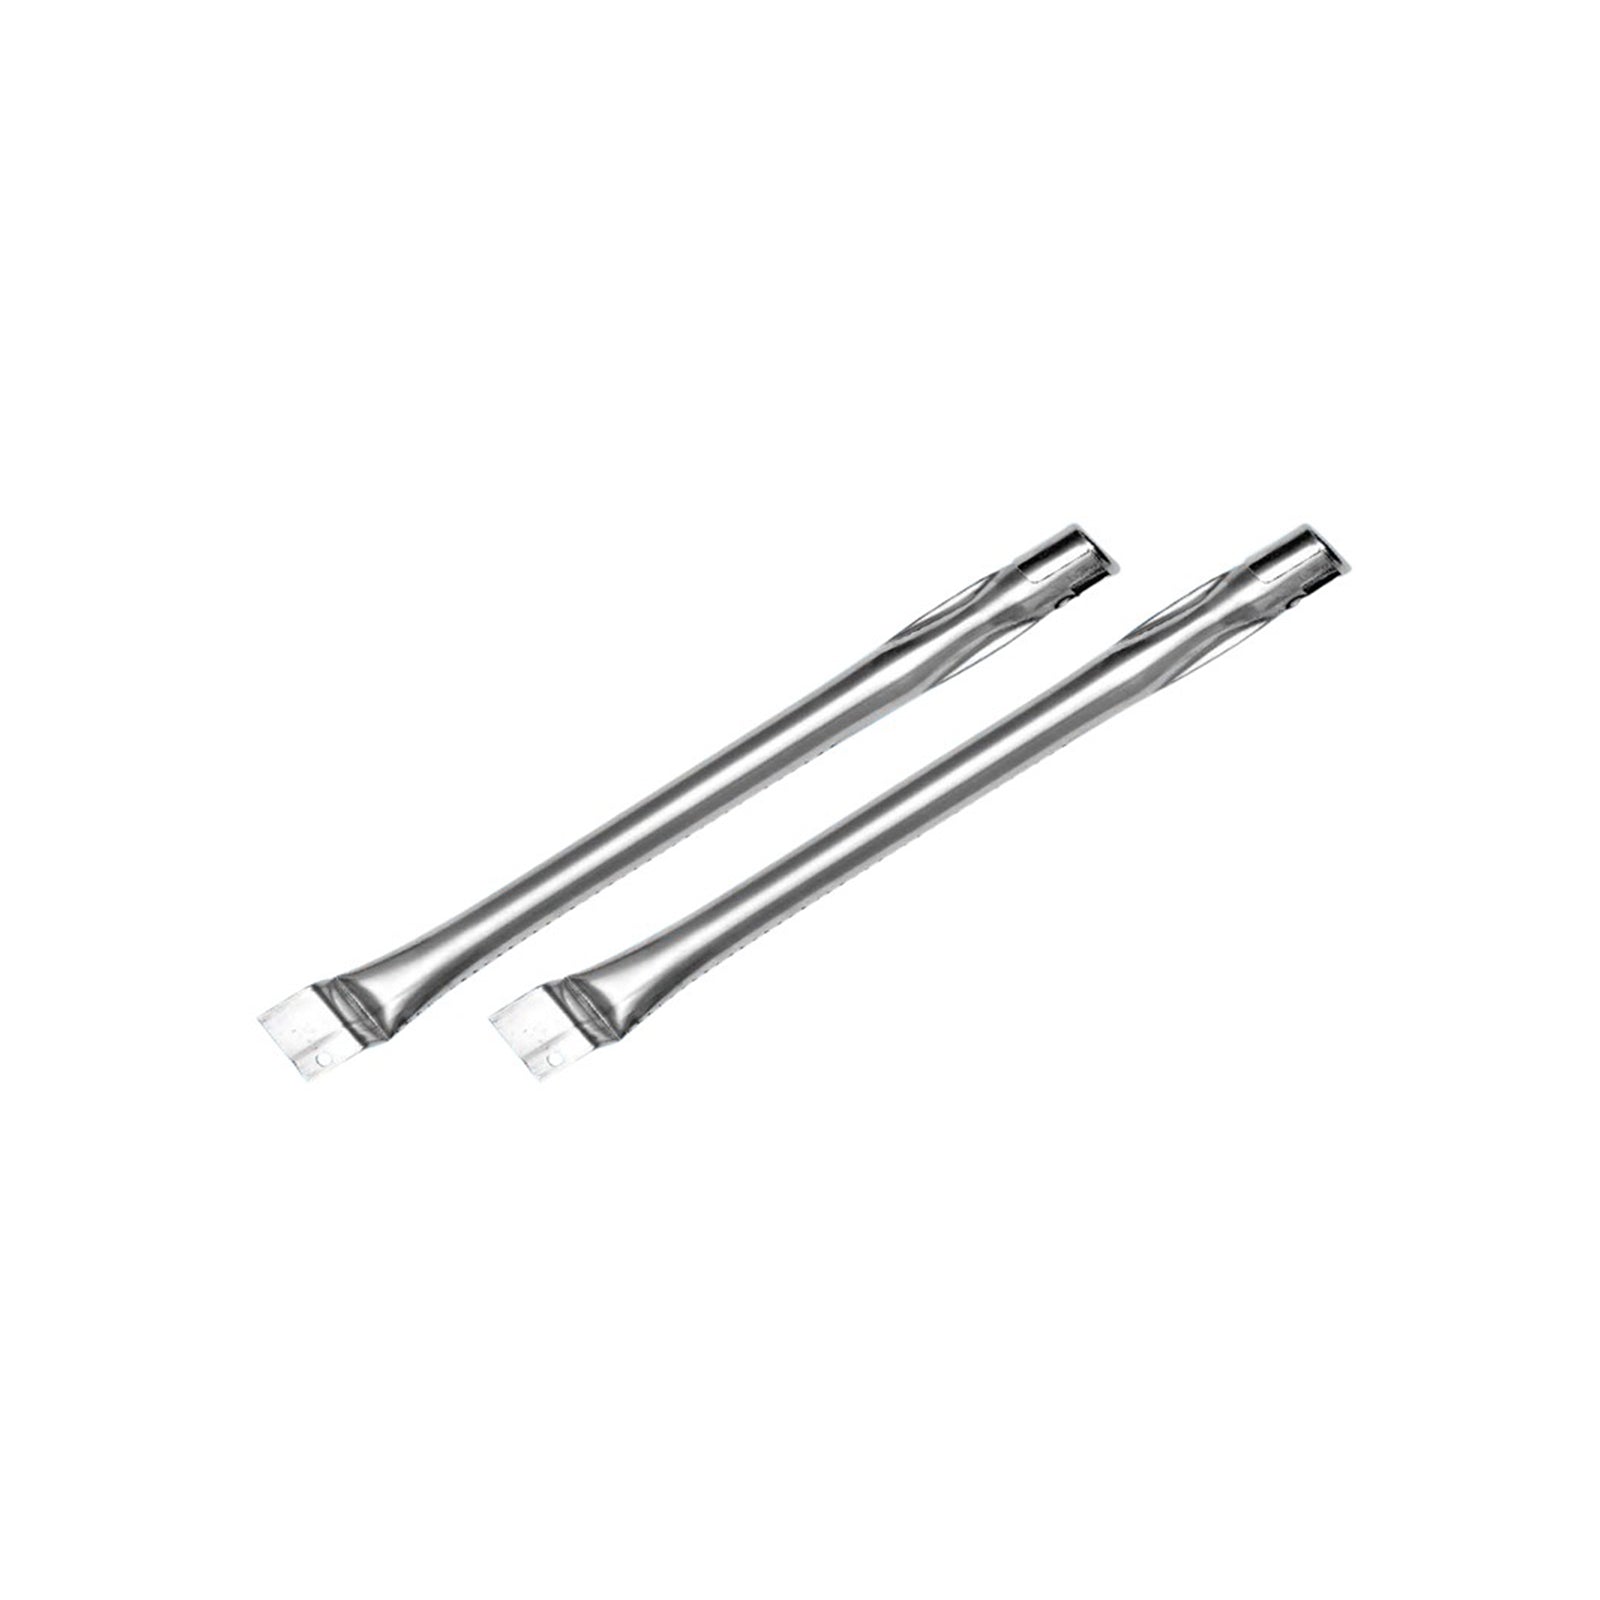 Gasmate - Stainless Steel Railburner (2 Pack)